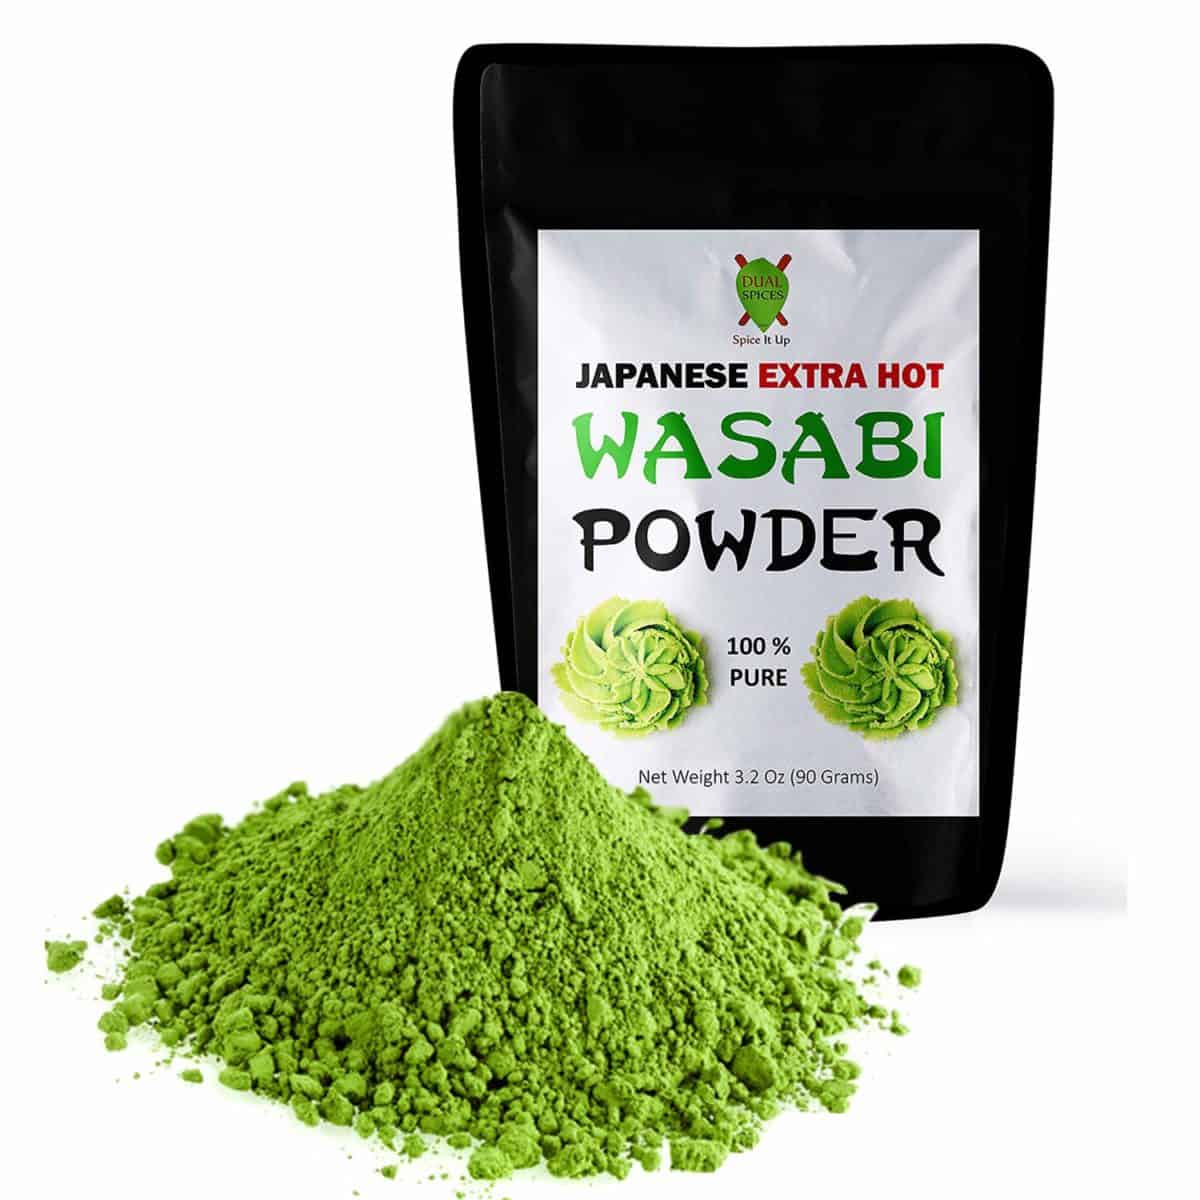 Wasabi powder as a substitute for mustard powder